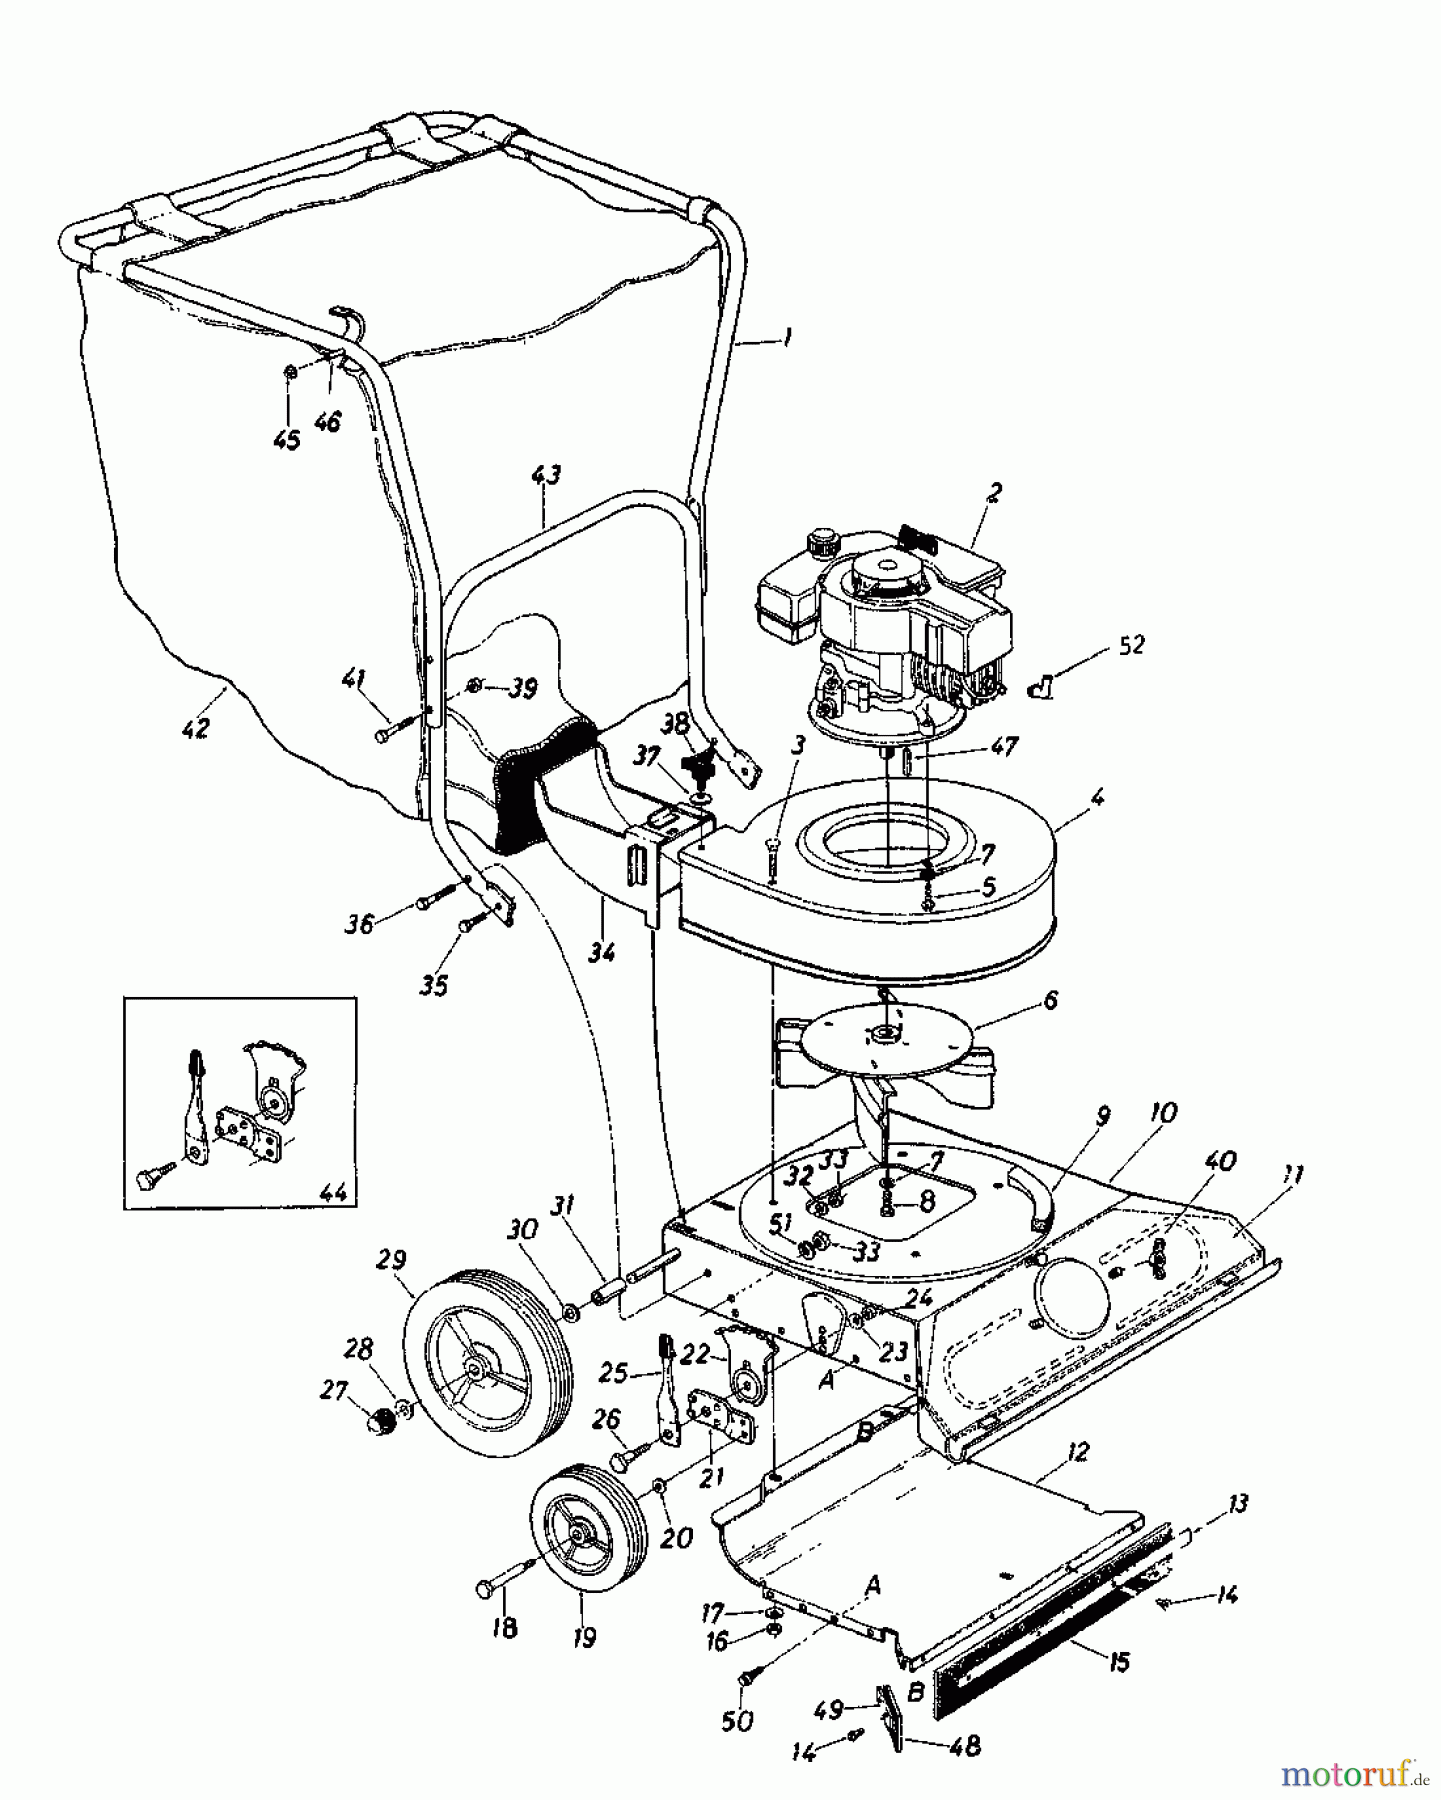  MTD Leaf blower, Blower vac Air-Vac 660 245-6600  (1985) Bag, Handle, Wheels